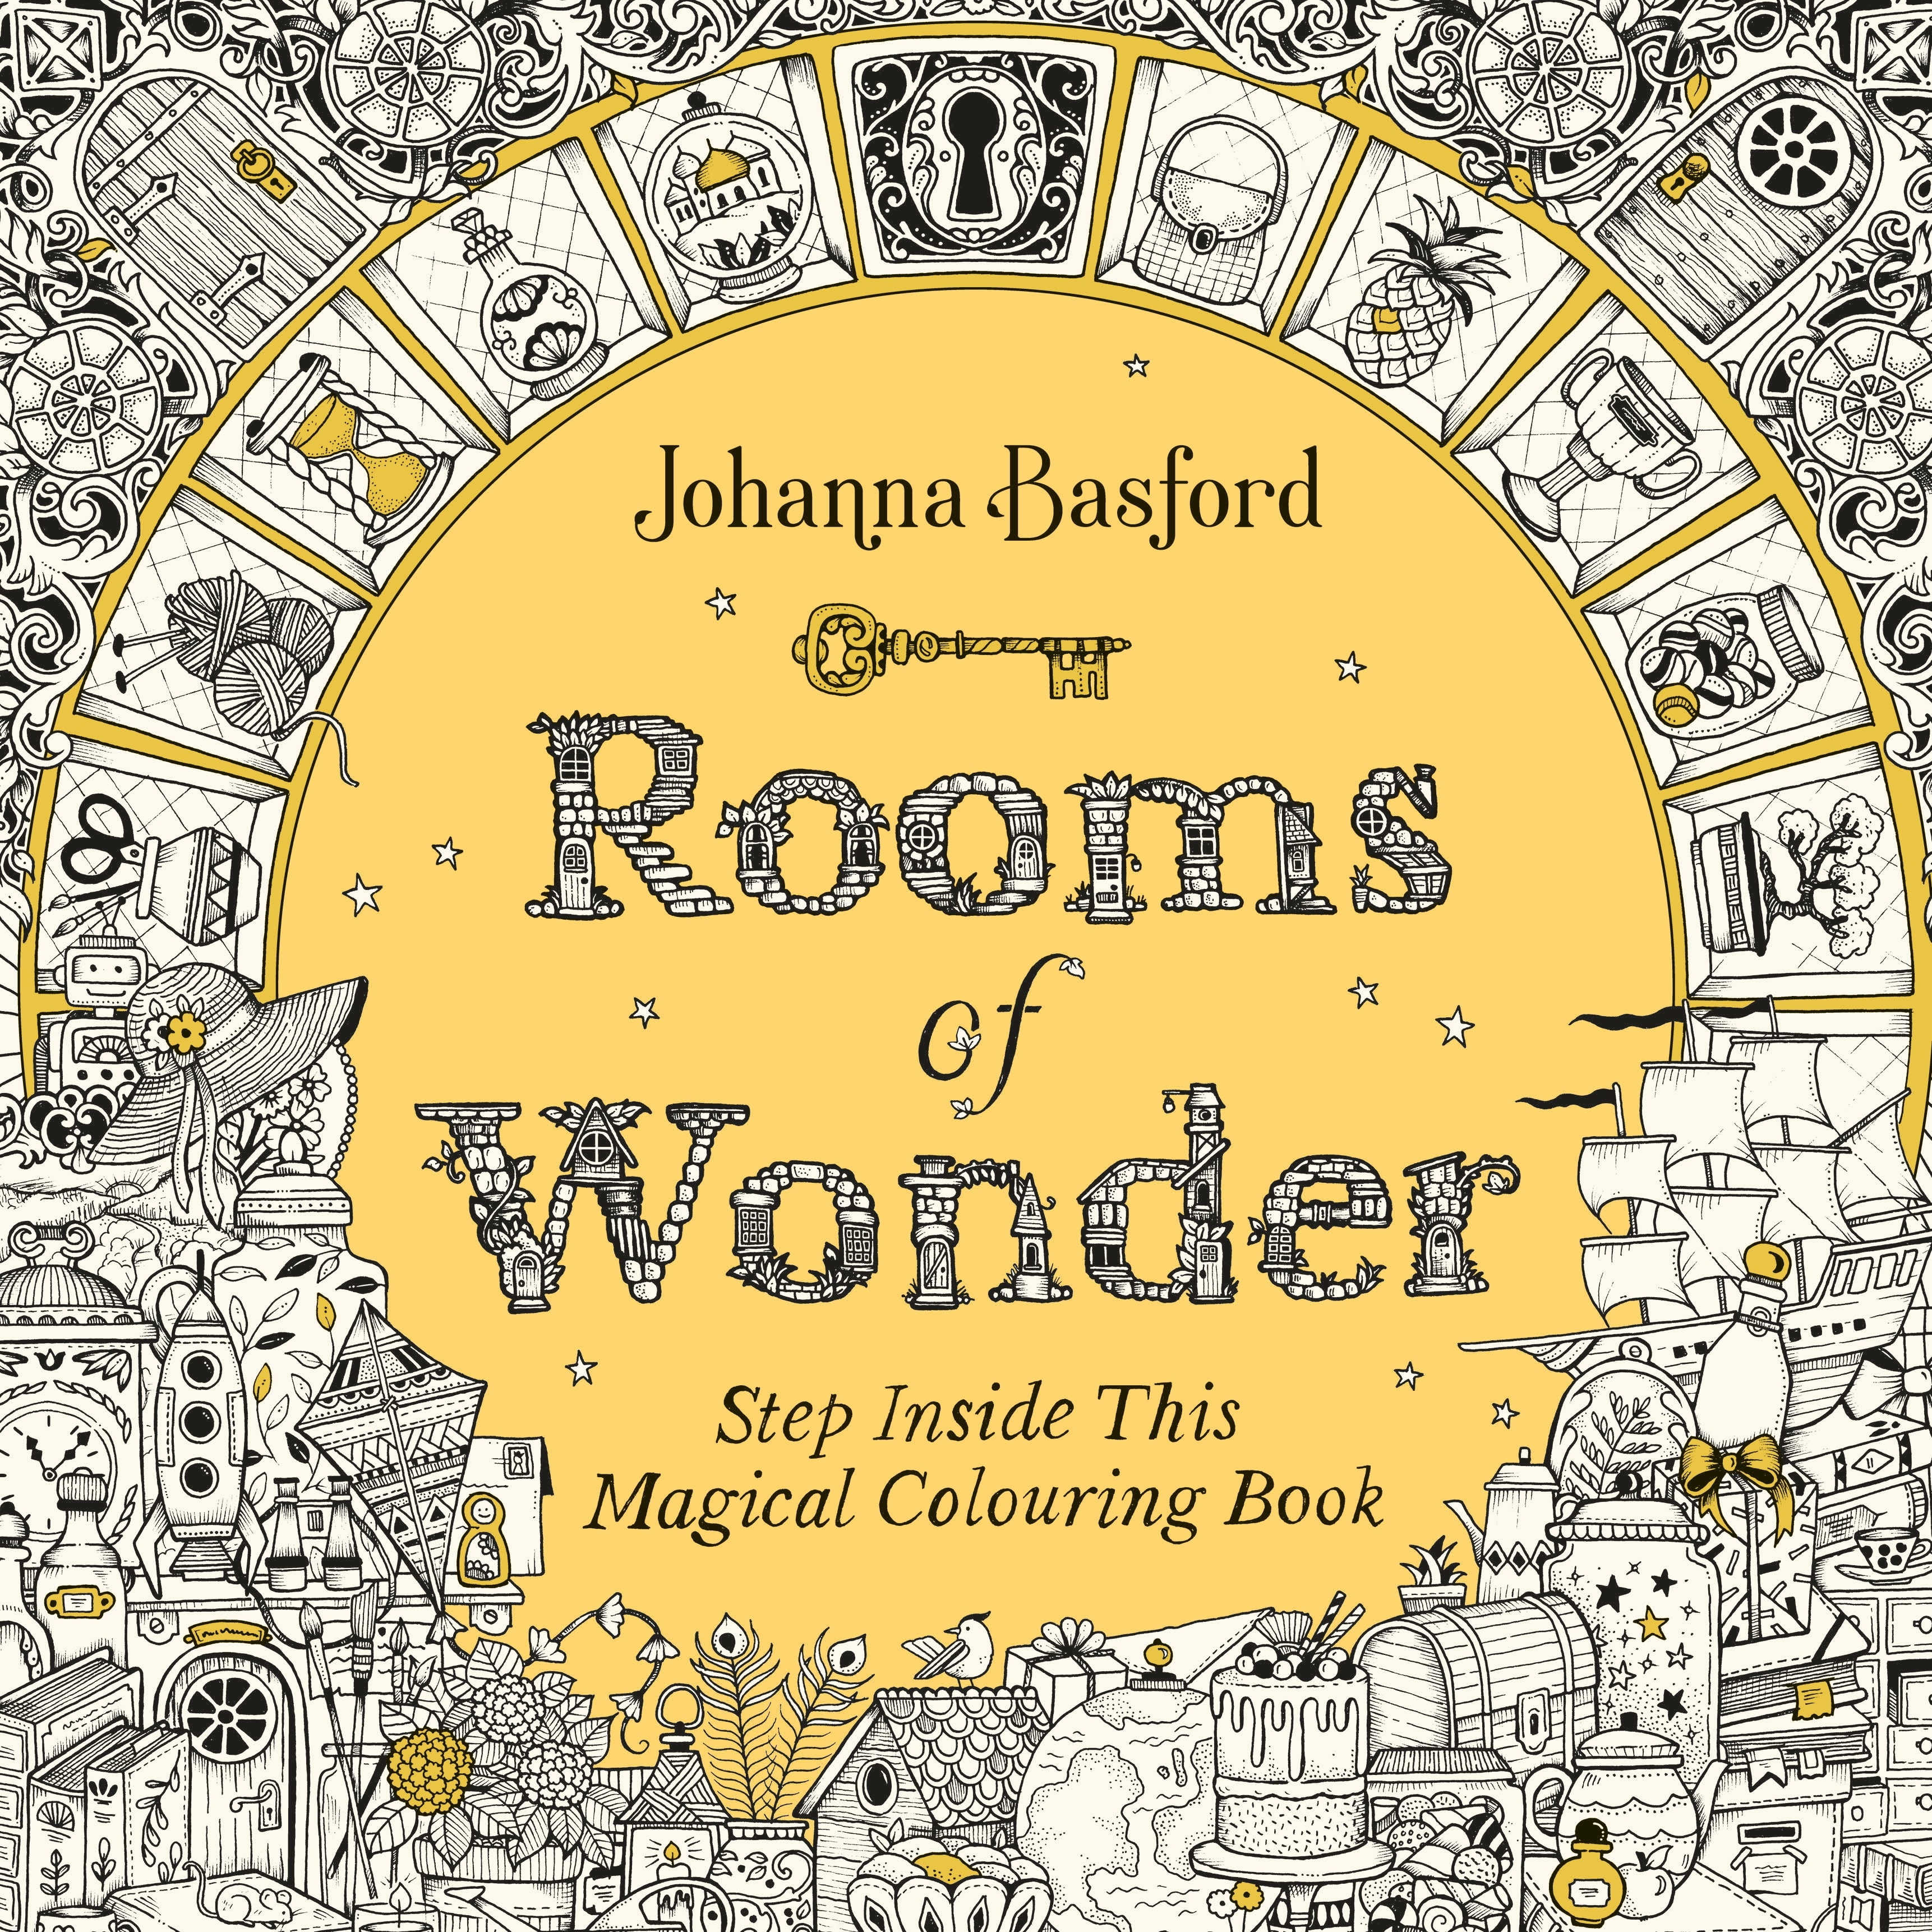 Book “Rooms of Wonder” by Johanna Basford — October 6, 2022